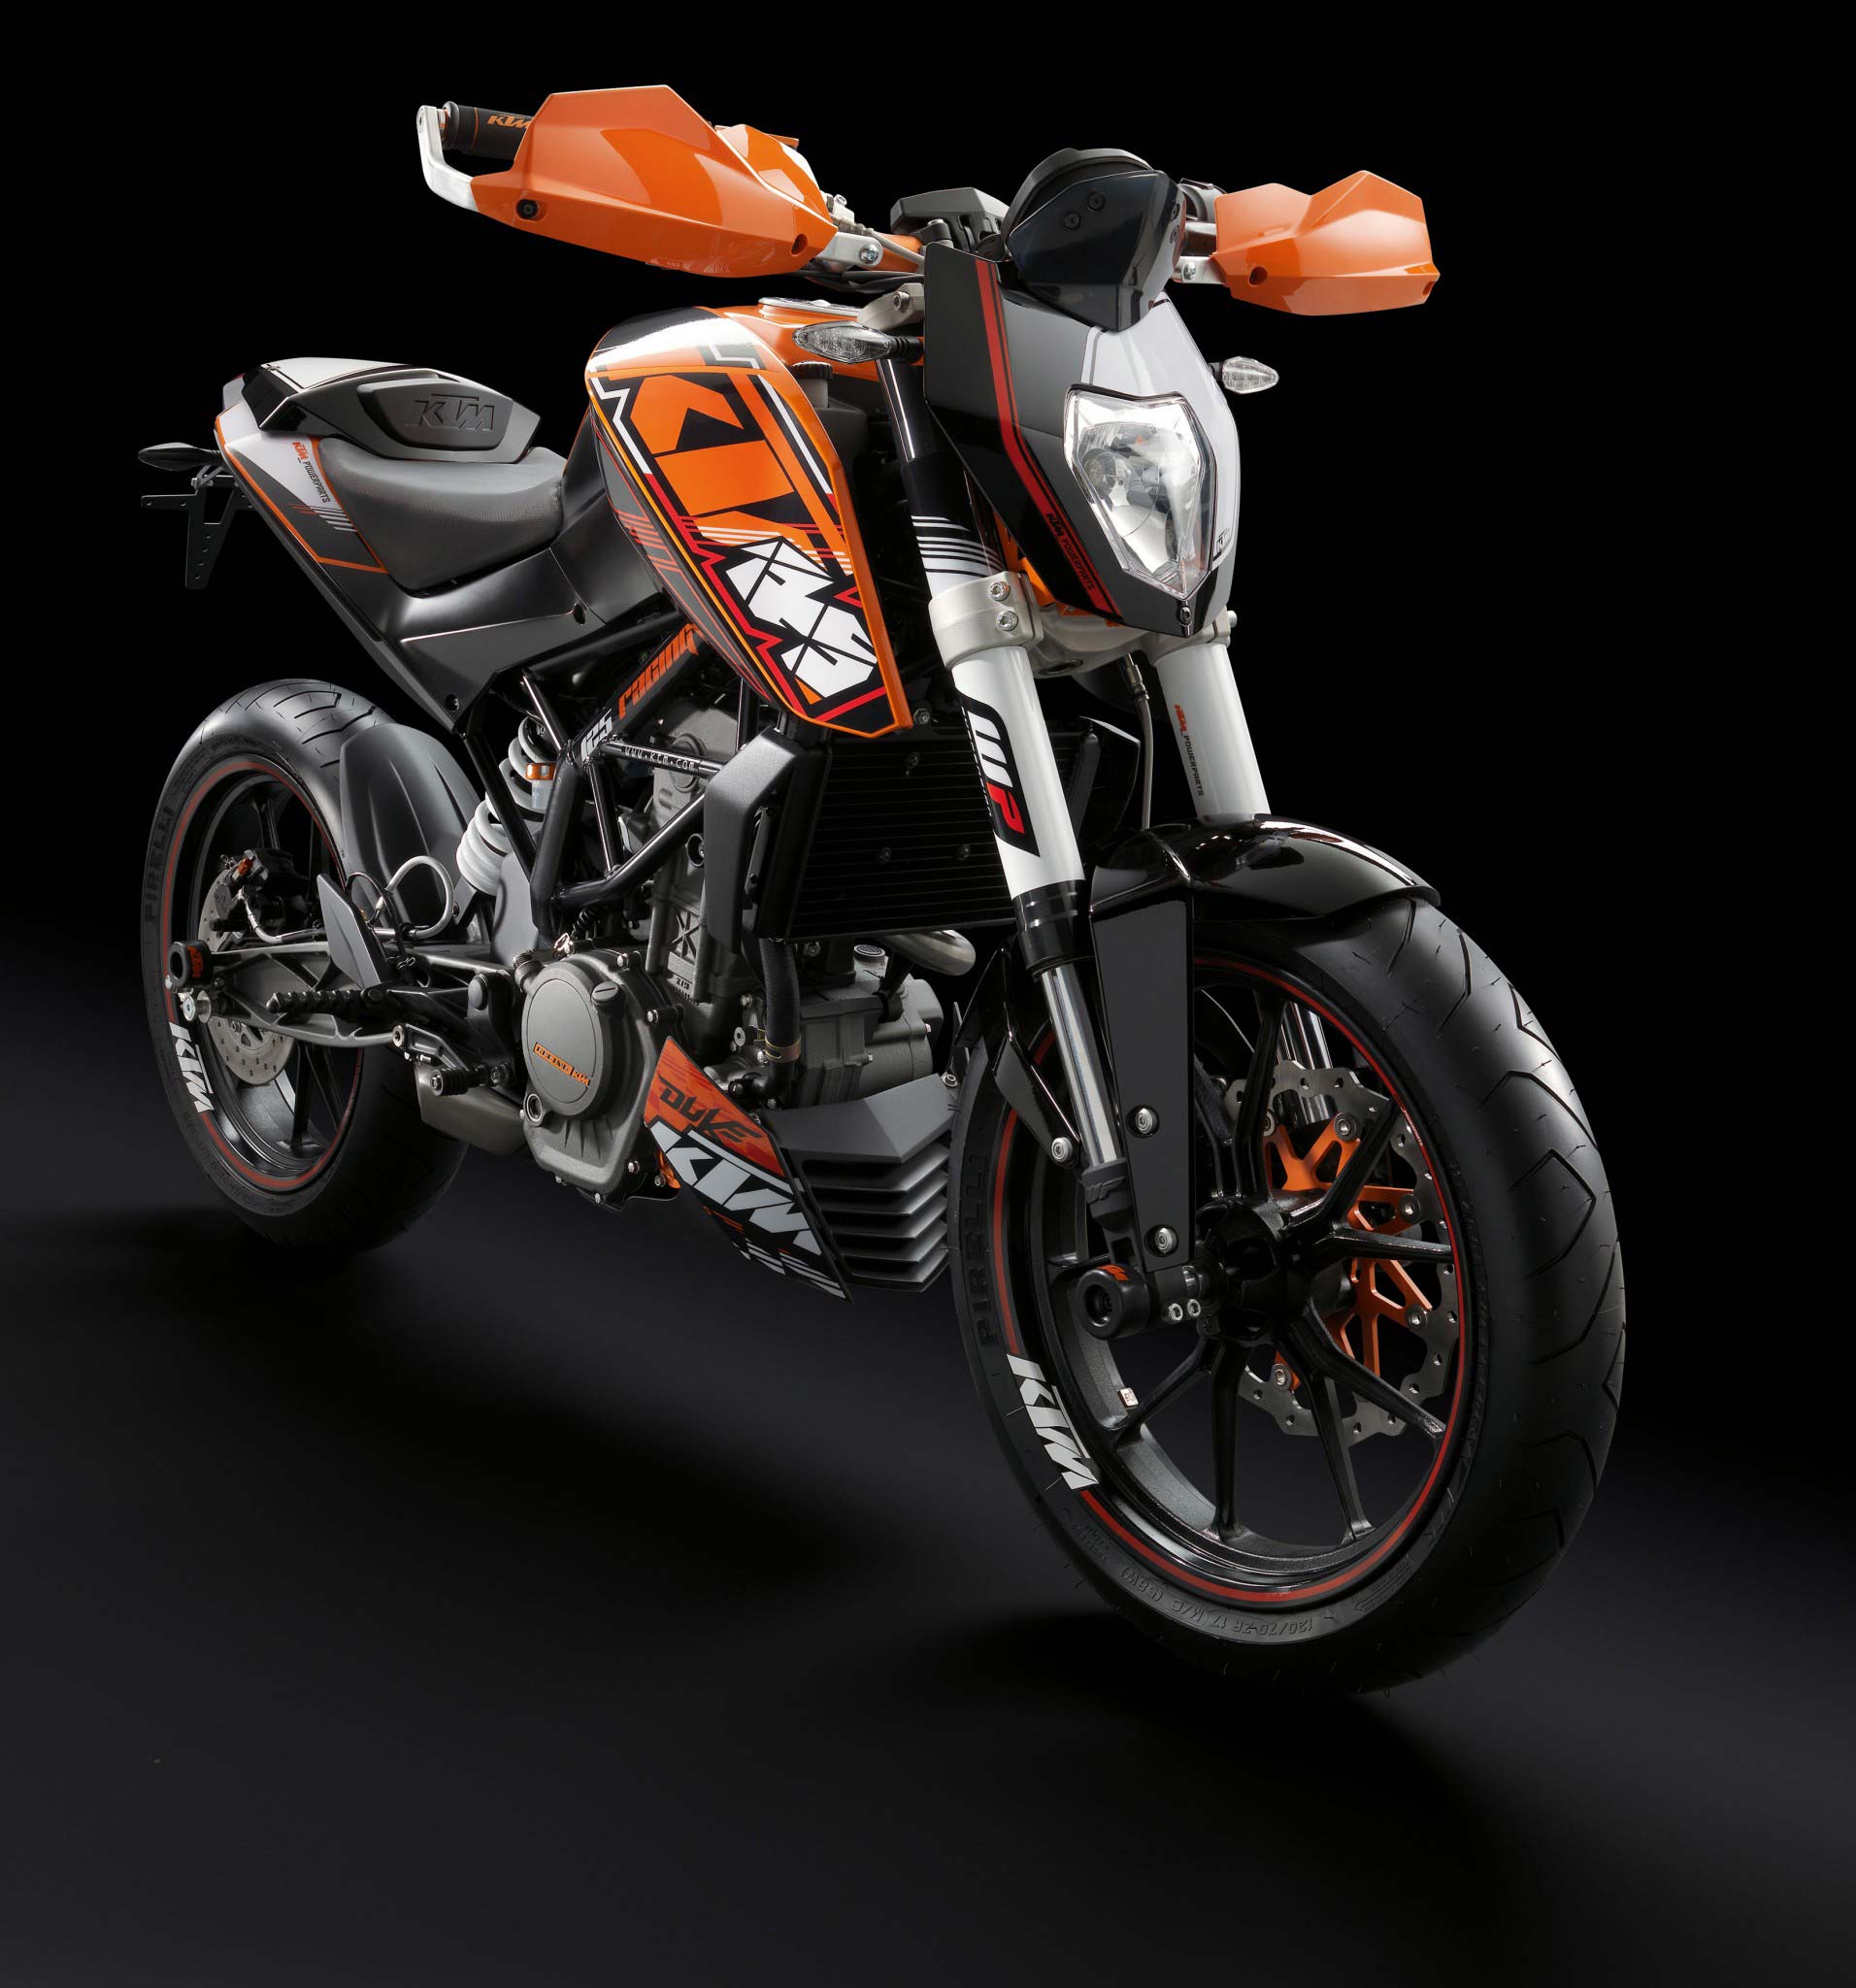 2011 KTM 125 Duke - The Bike Bajaj Built - Asphalt & Rubber